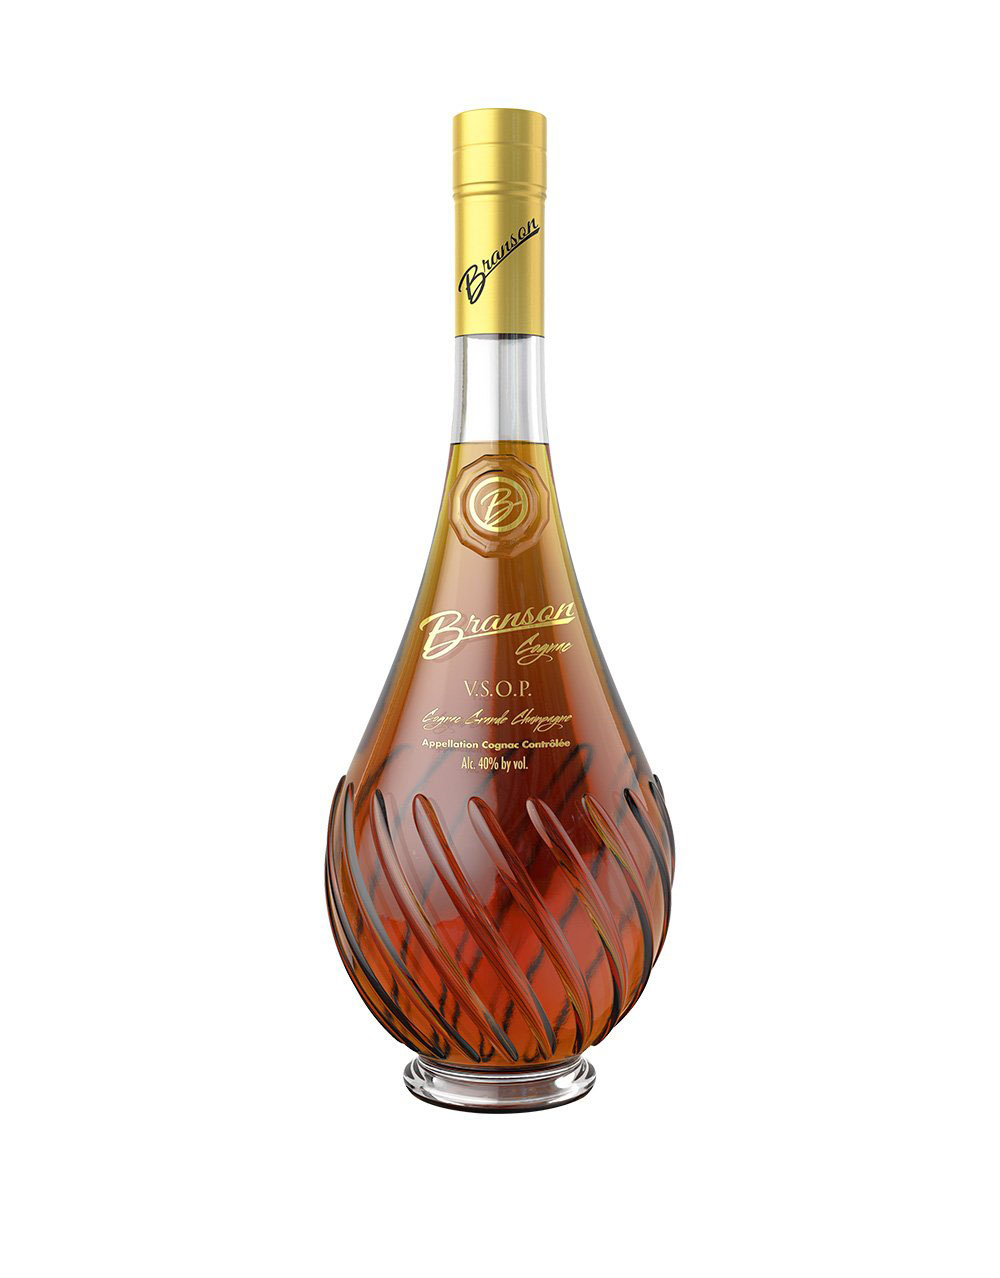 Branson Cognac Grande Champagne V.S.O.P.